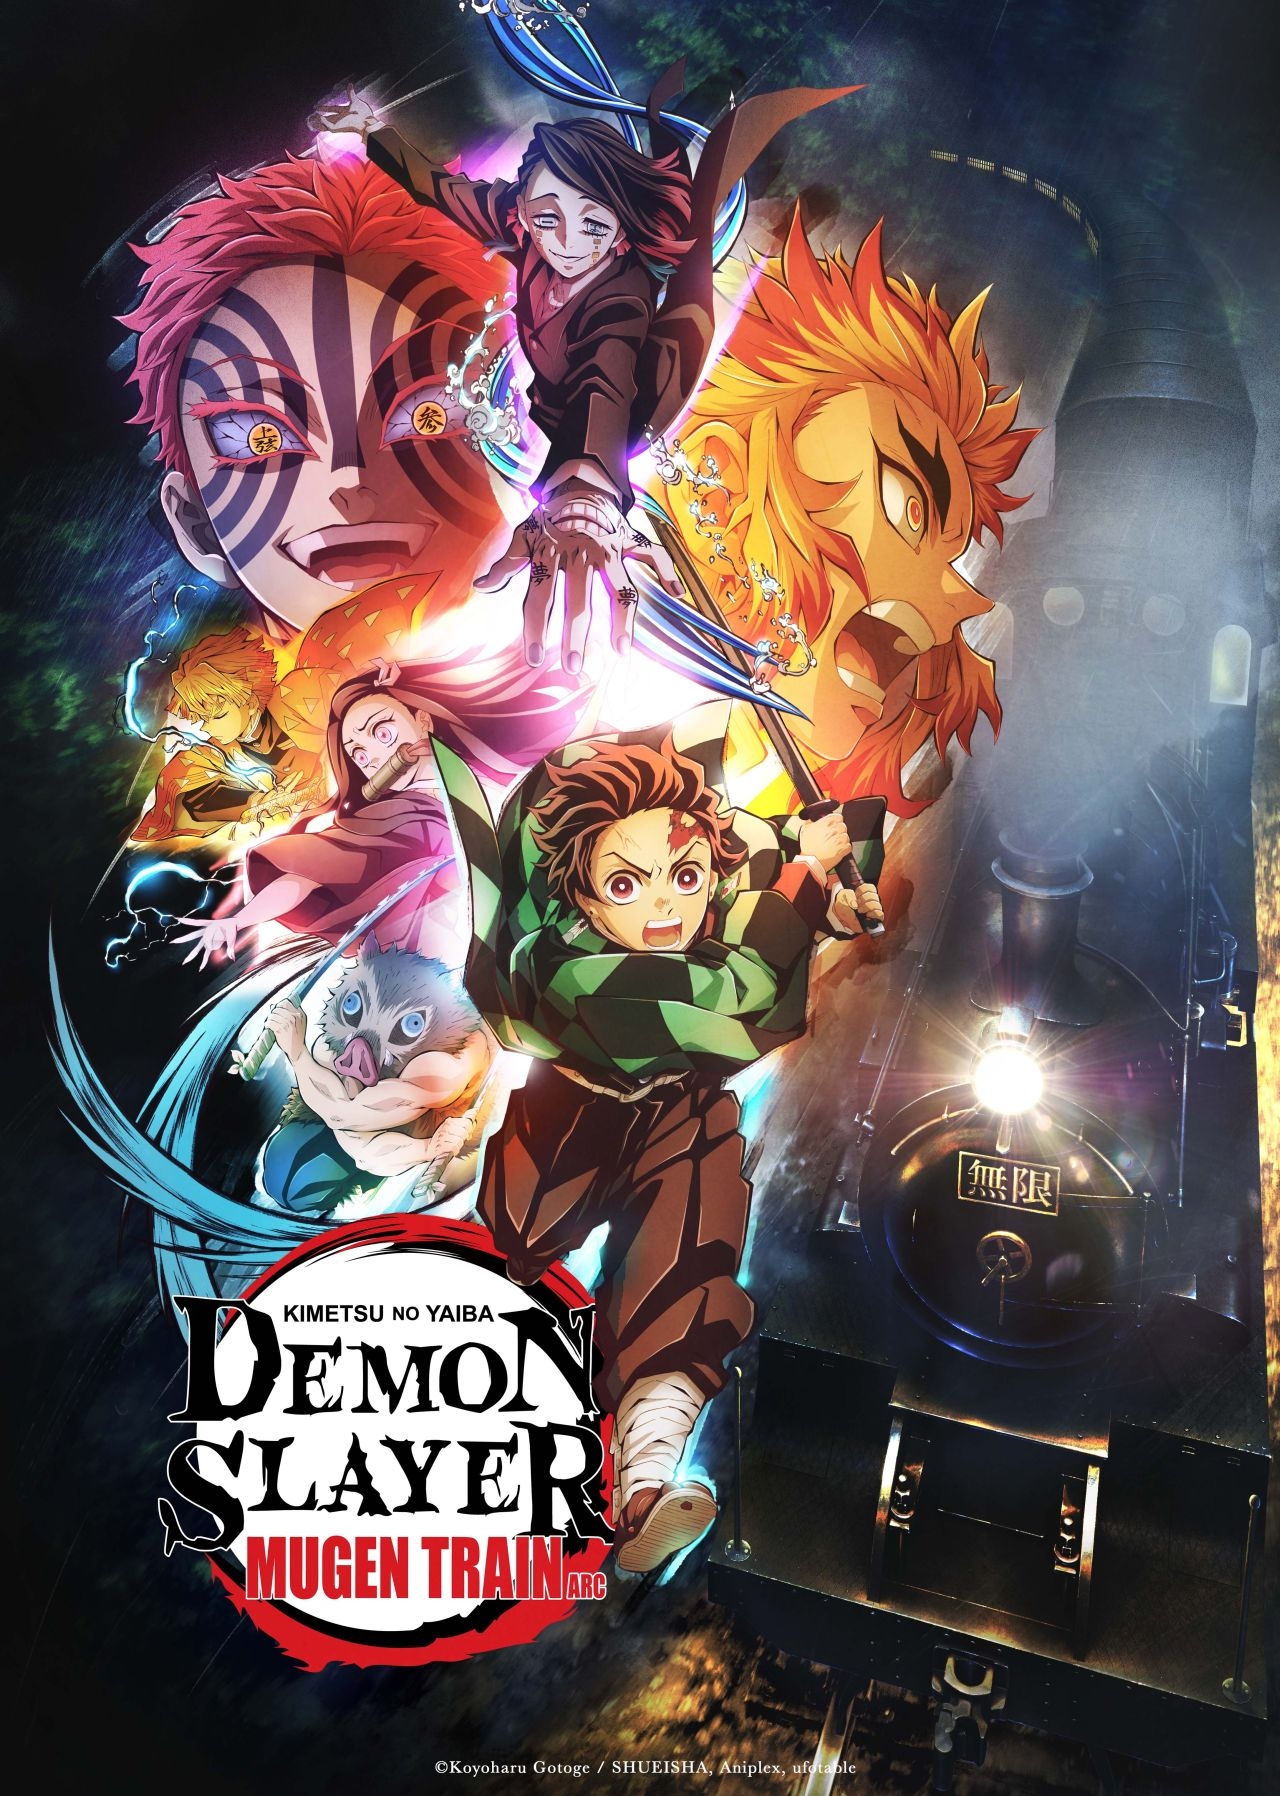 Demon Slayer: Kimetsu no Yaiba' Story Arc and Movie NOW Streaming